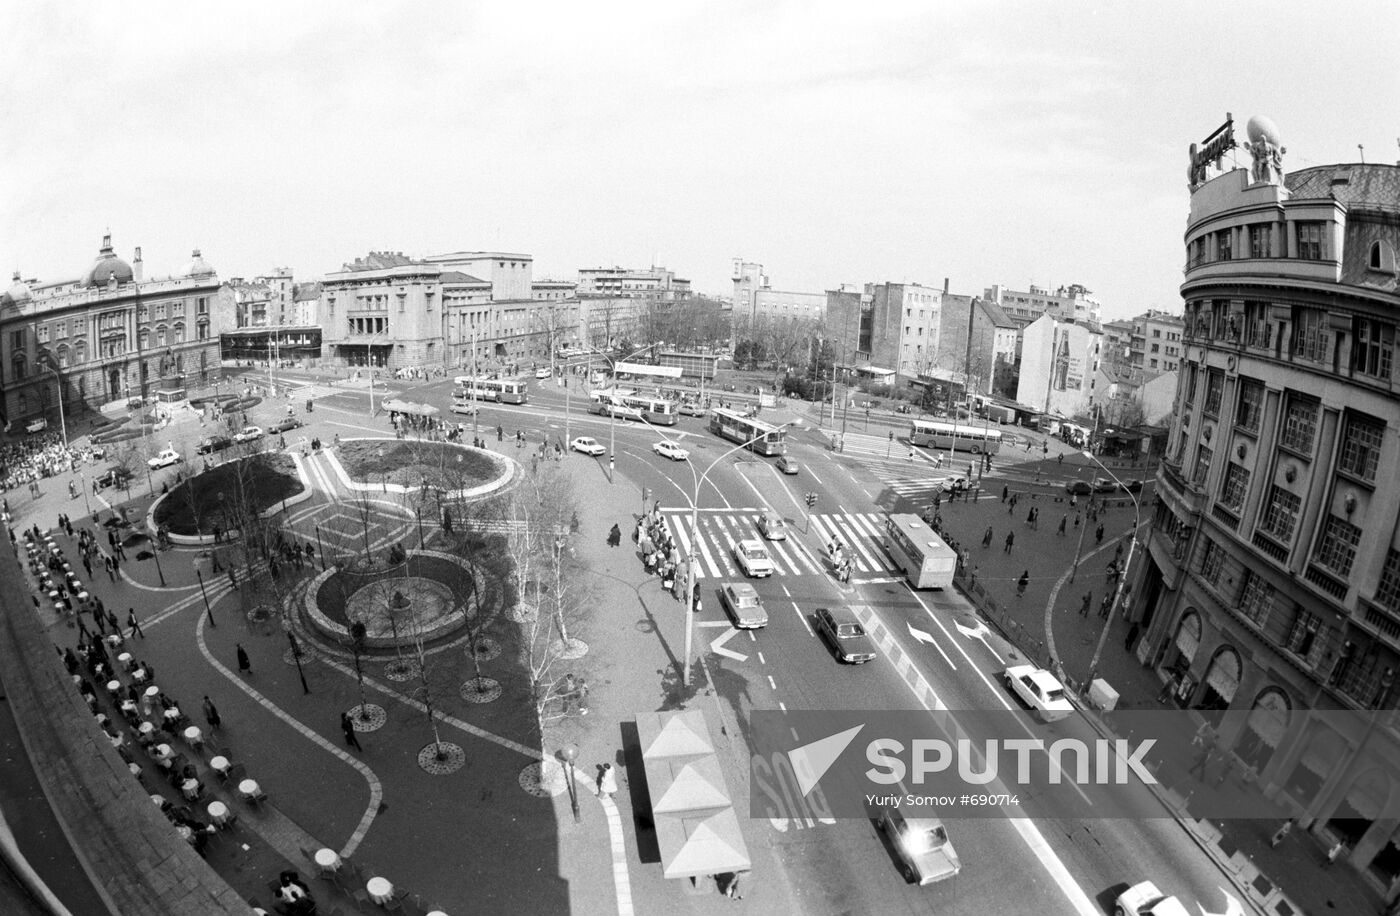 View of central square in Belgrade